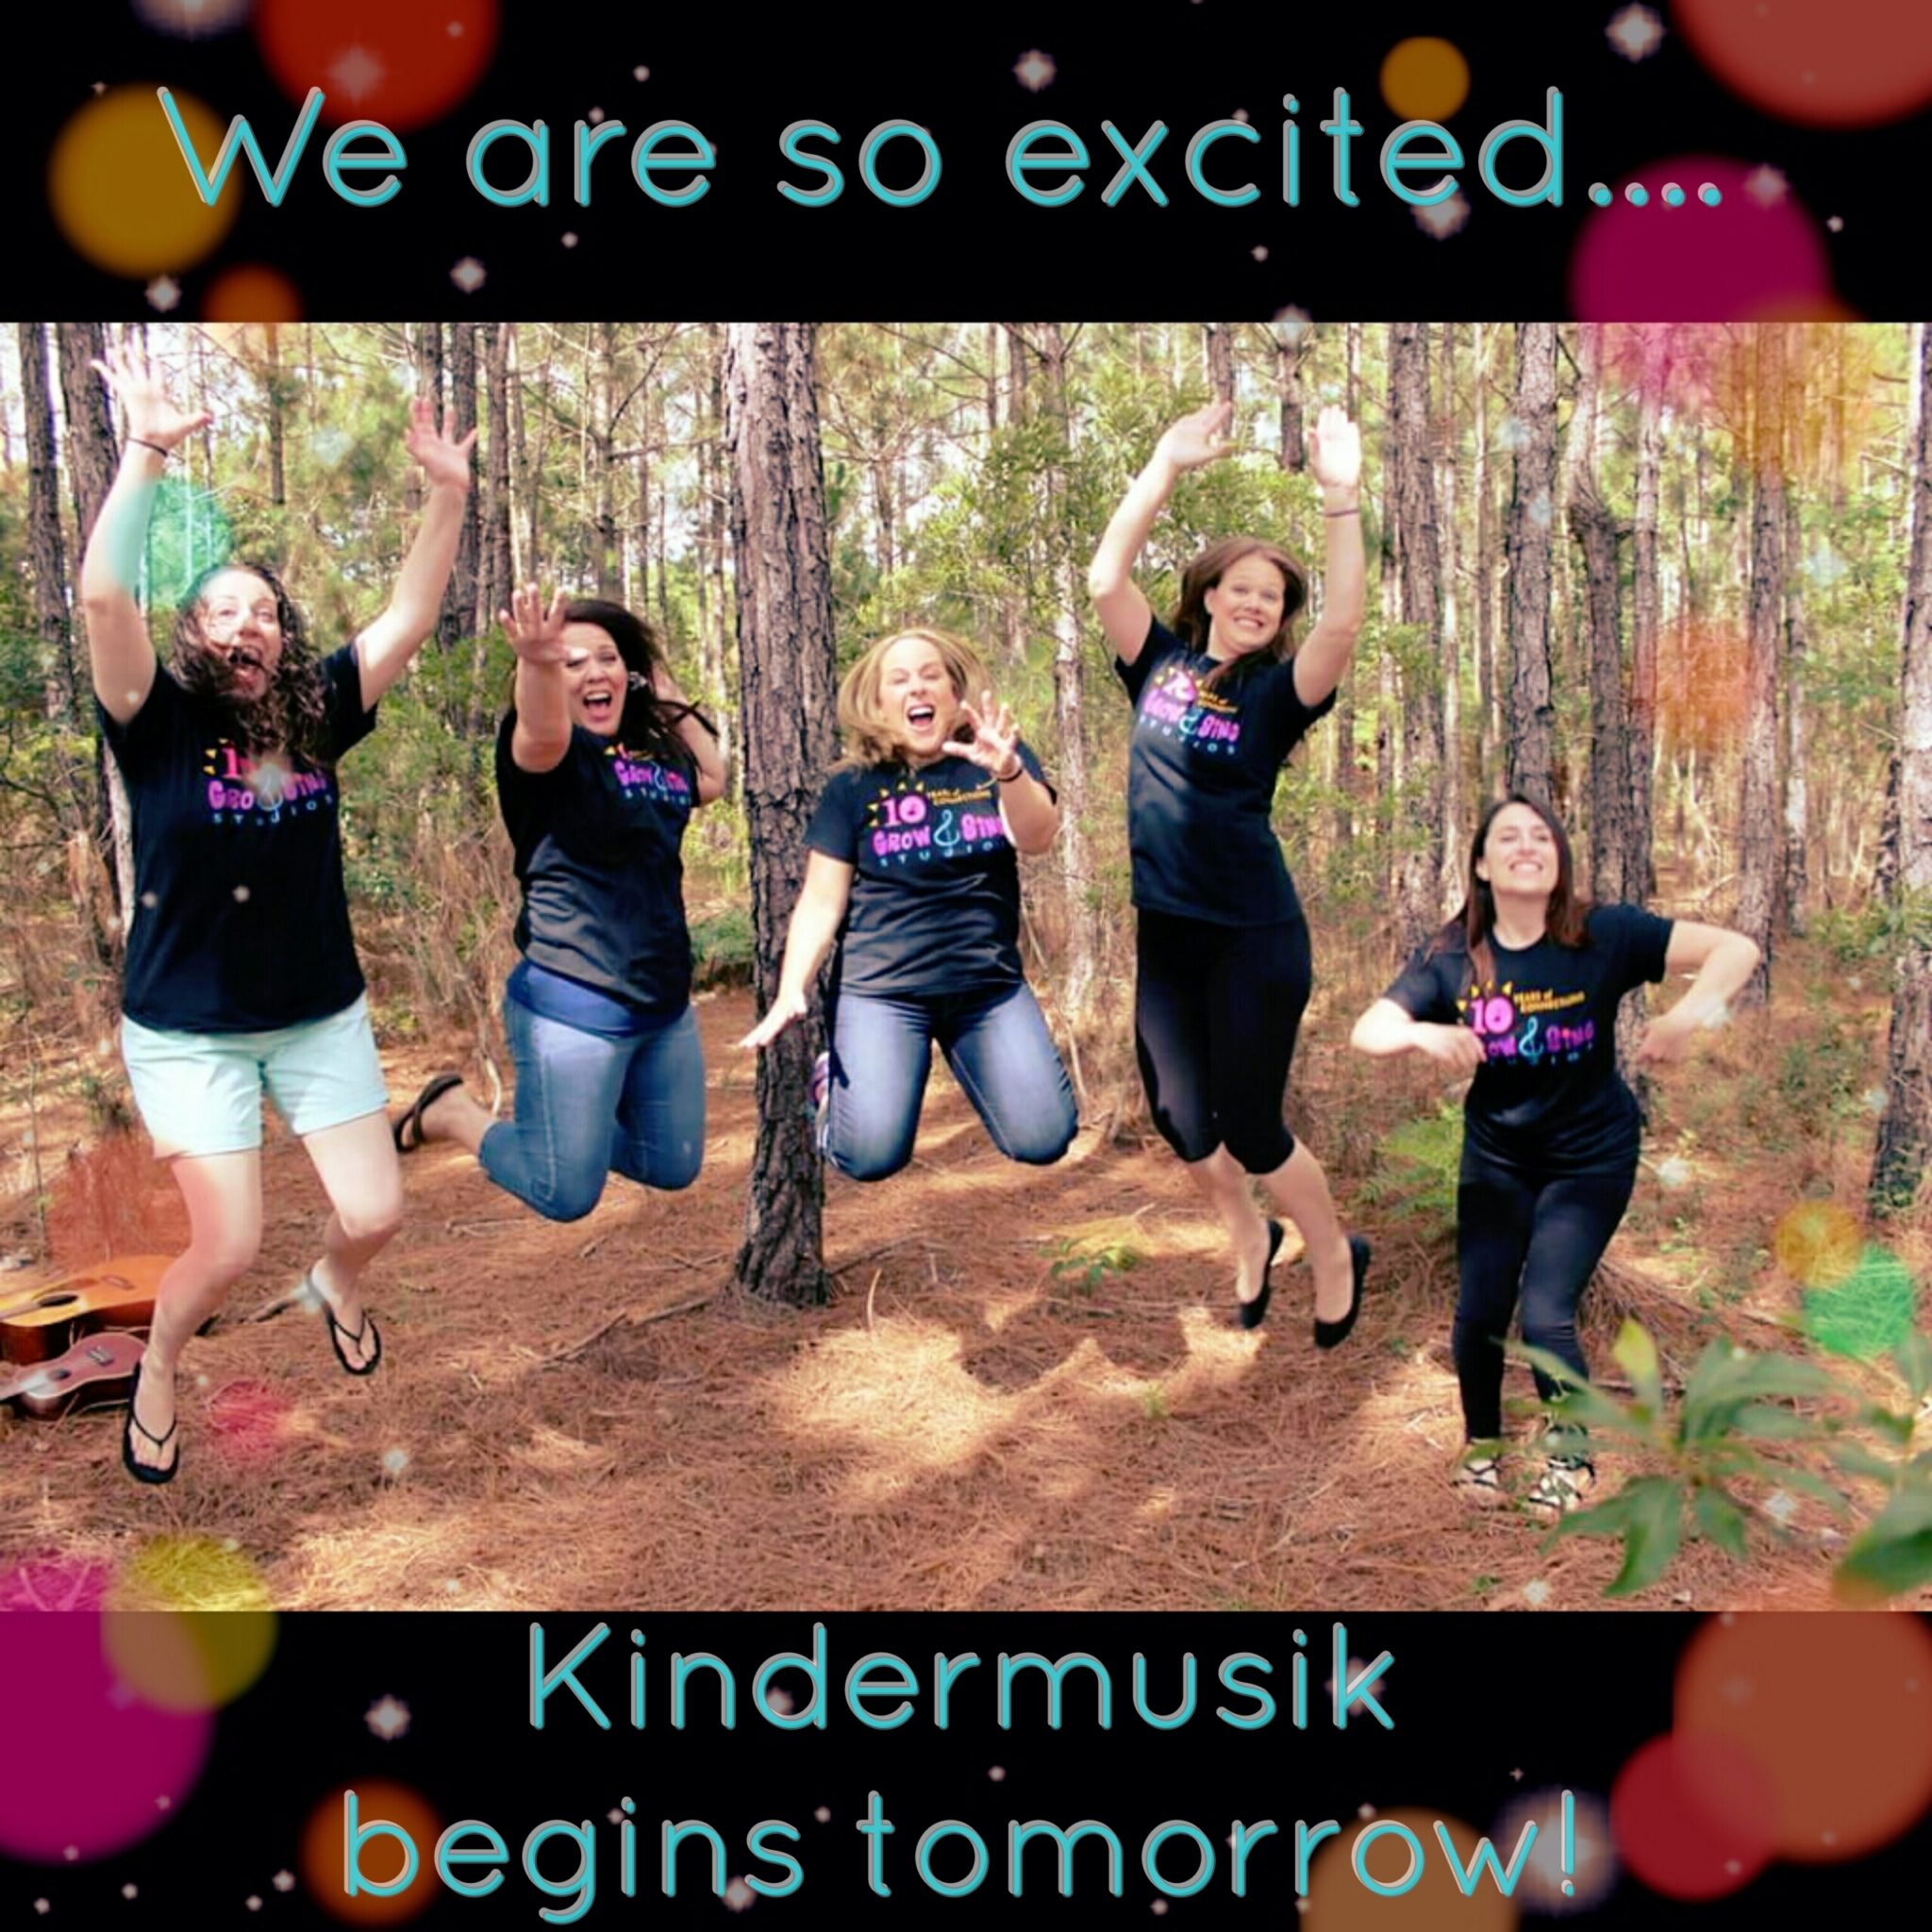 we are so excited... kindermusik begins tomorrow